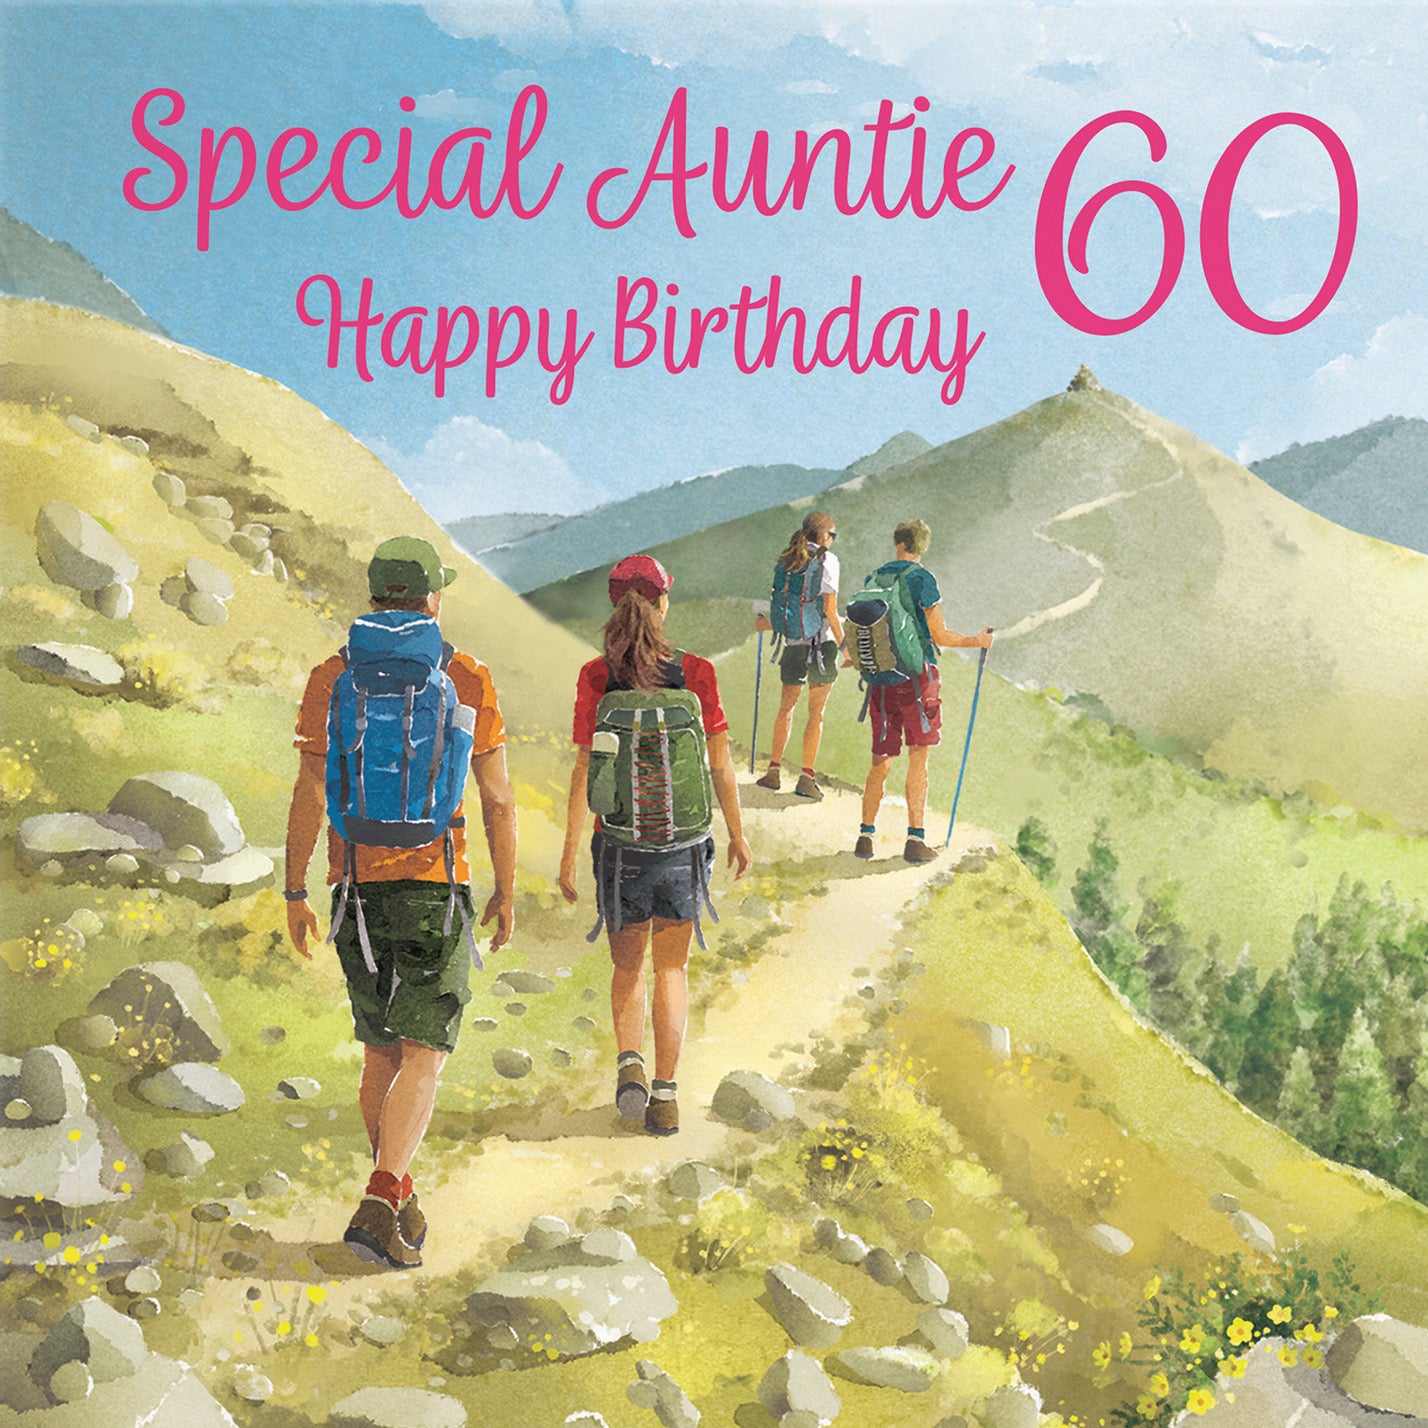 60th Auntie Walking Birthday Card Milo's Gallery - Default Title (B0CR1VHTVT)